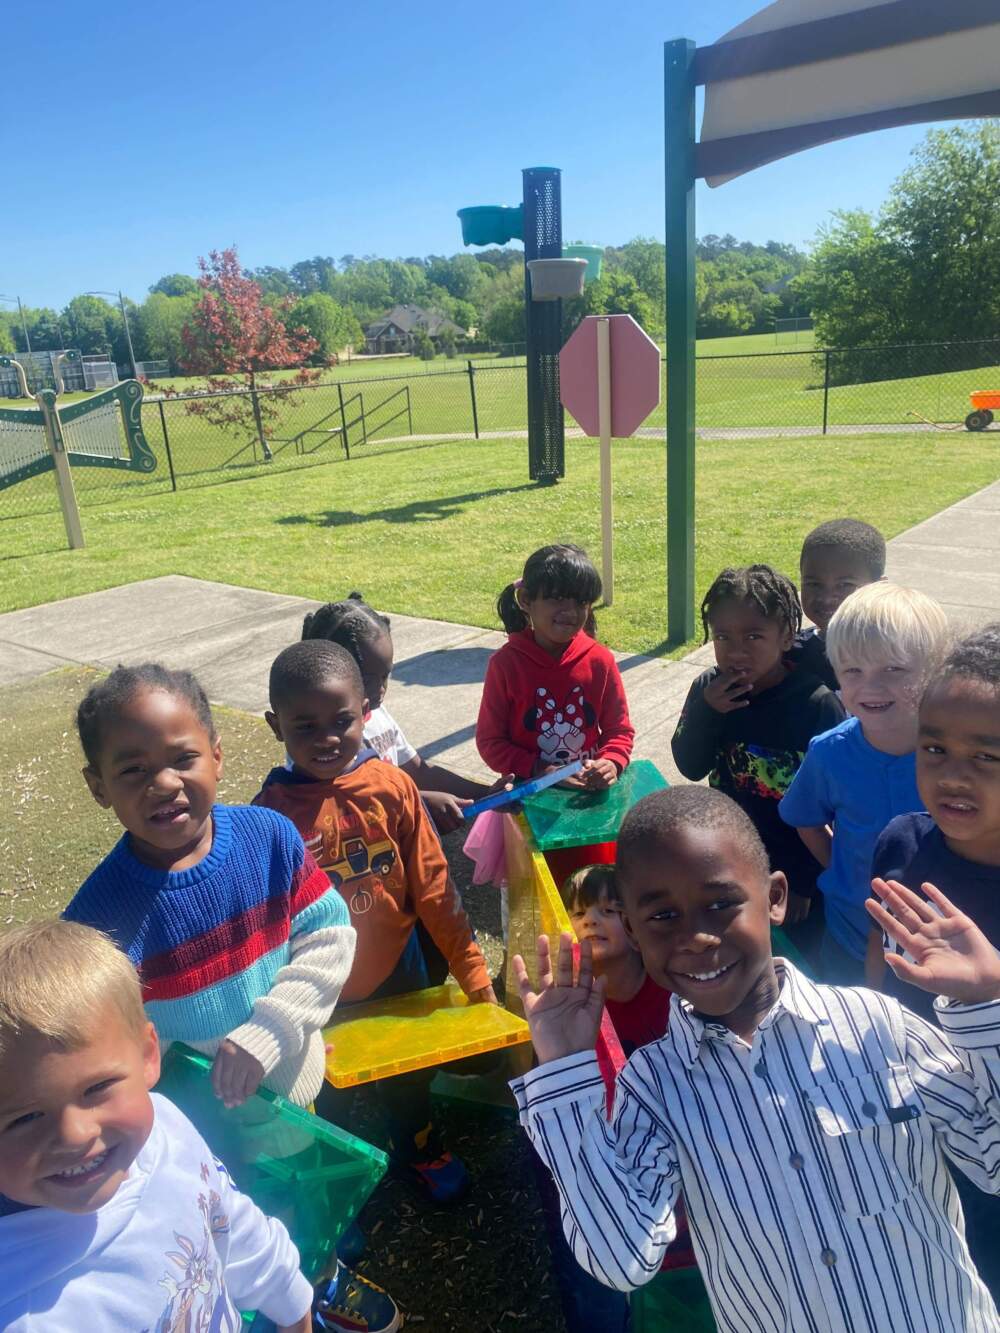 Preschoolers in Alabama play outside. (Courtesy of Keri Lee)